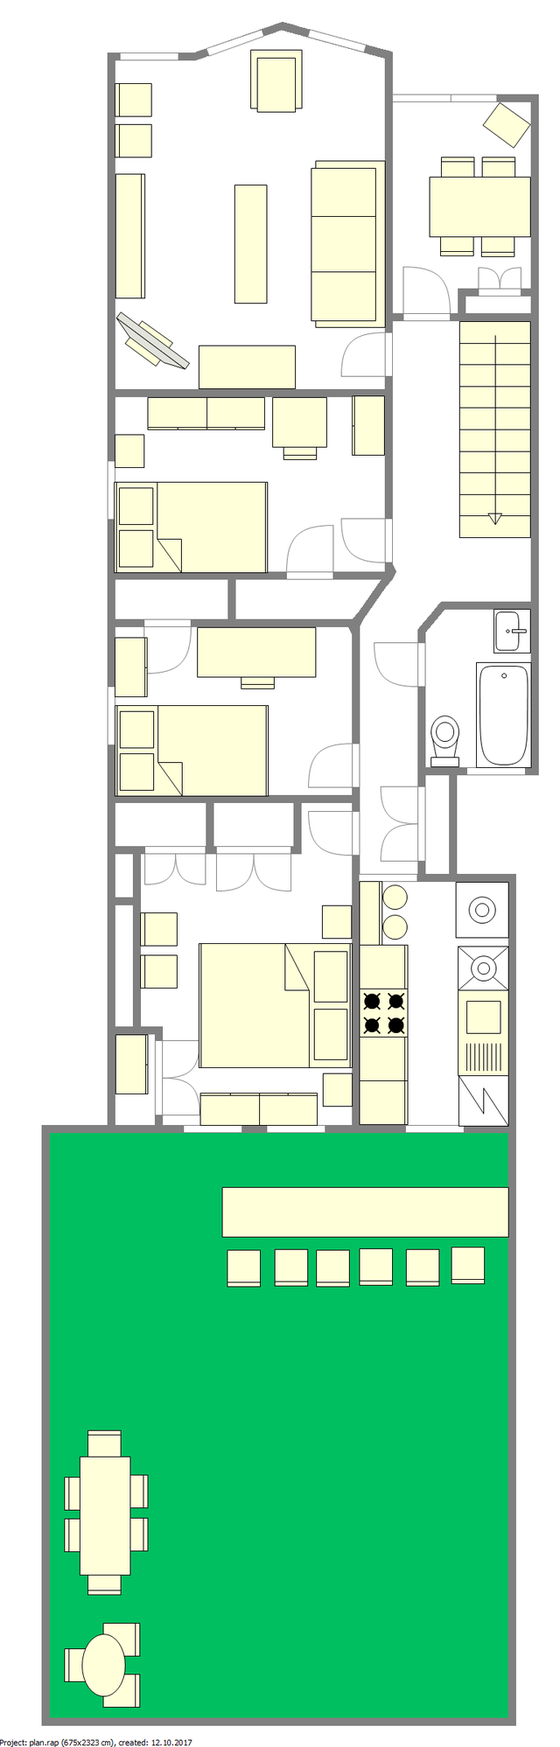 Apartamento Long Island City - Plano interativo